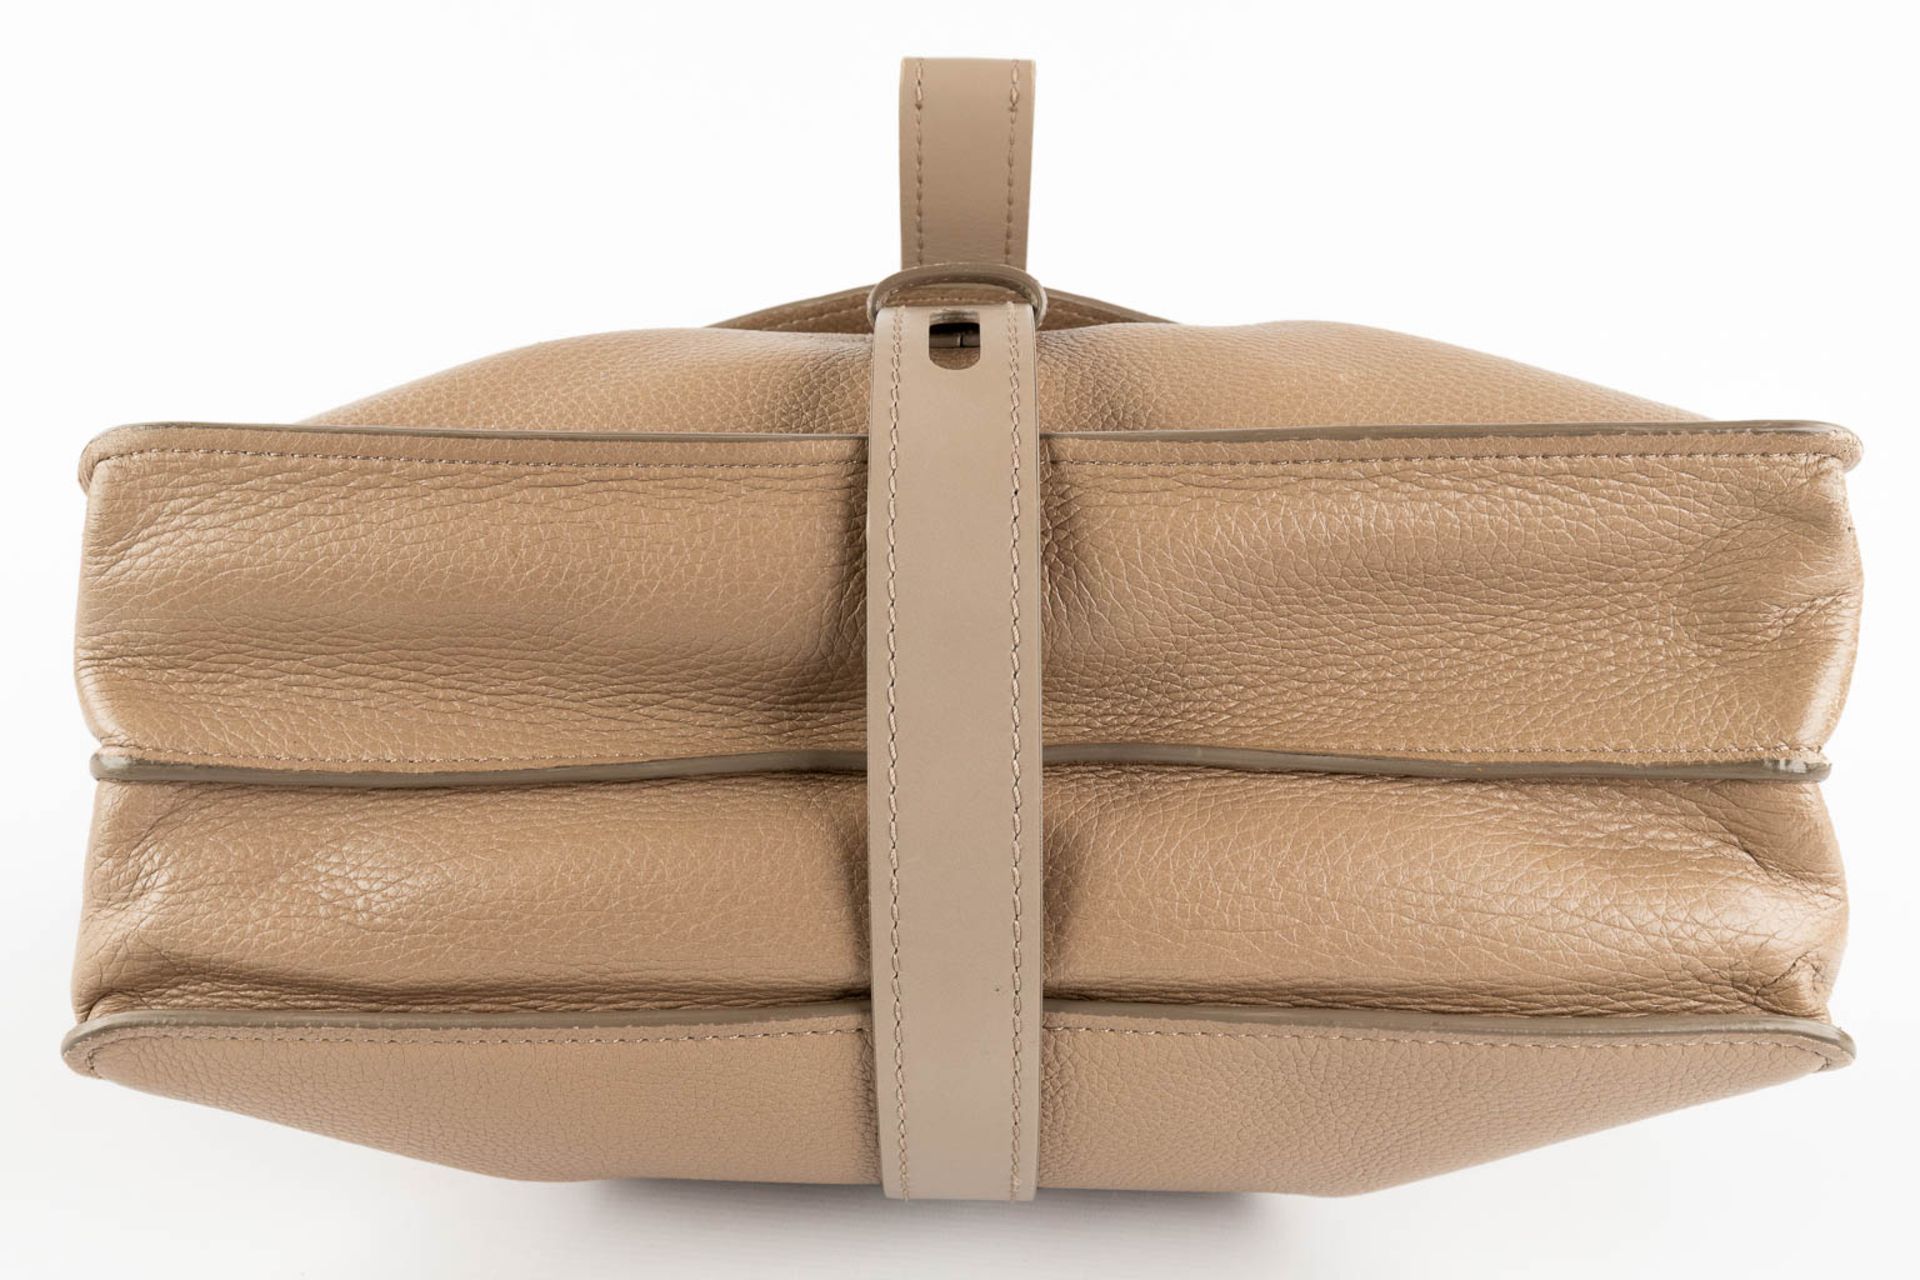 Chloé, a handbag made of brown leather. (W:38 x H:32 cm) - Image 7 of 19